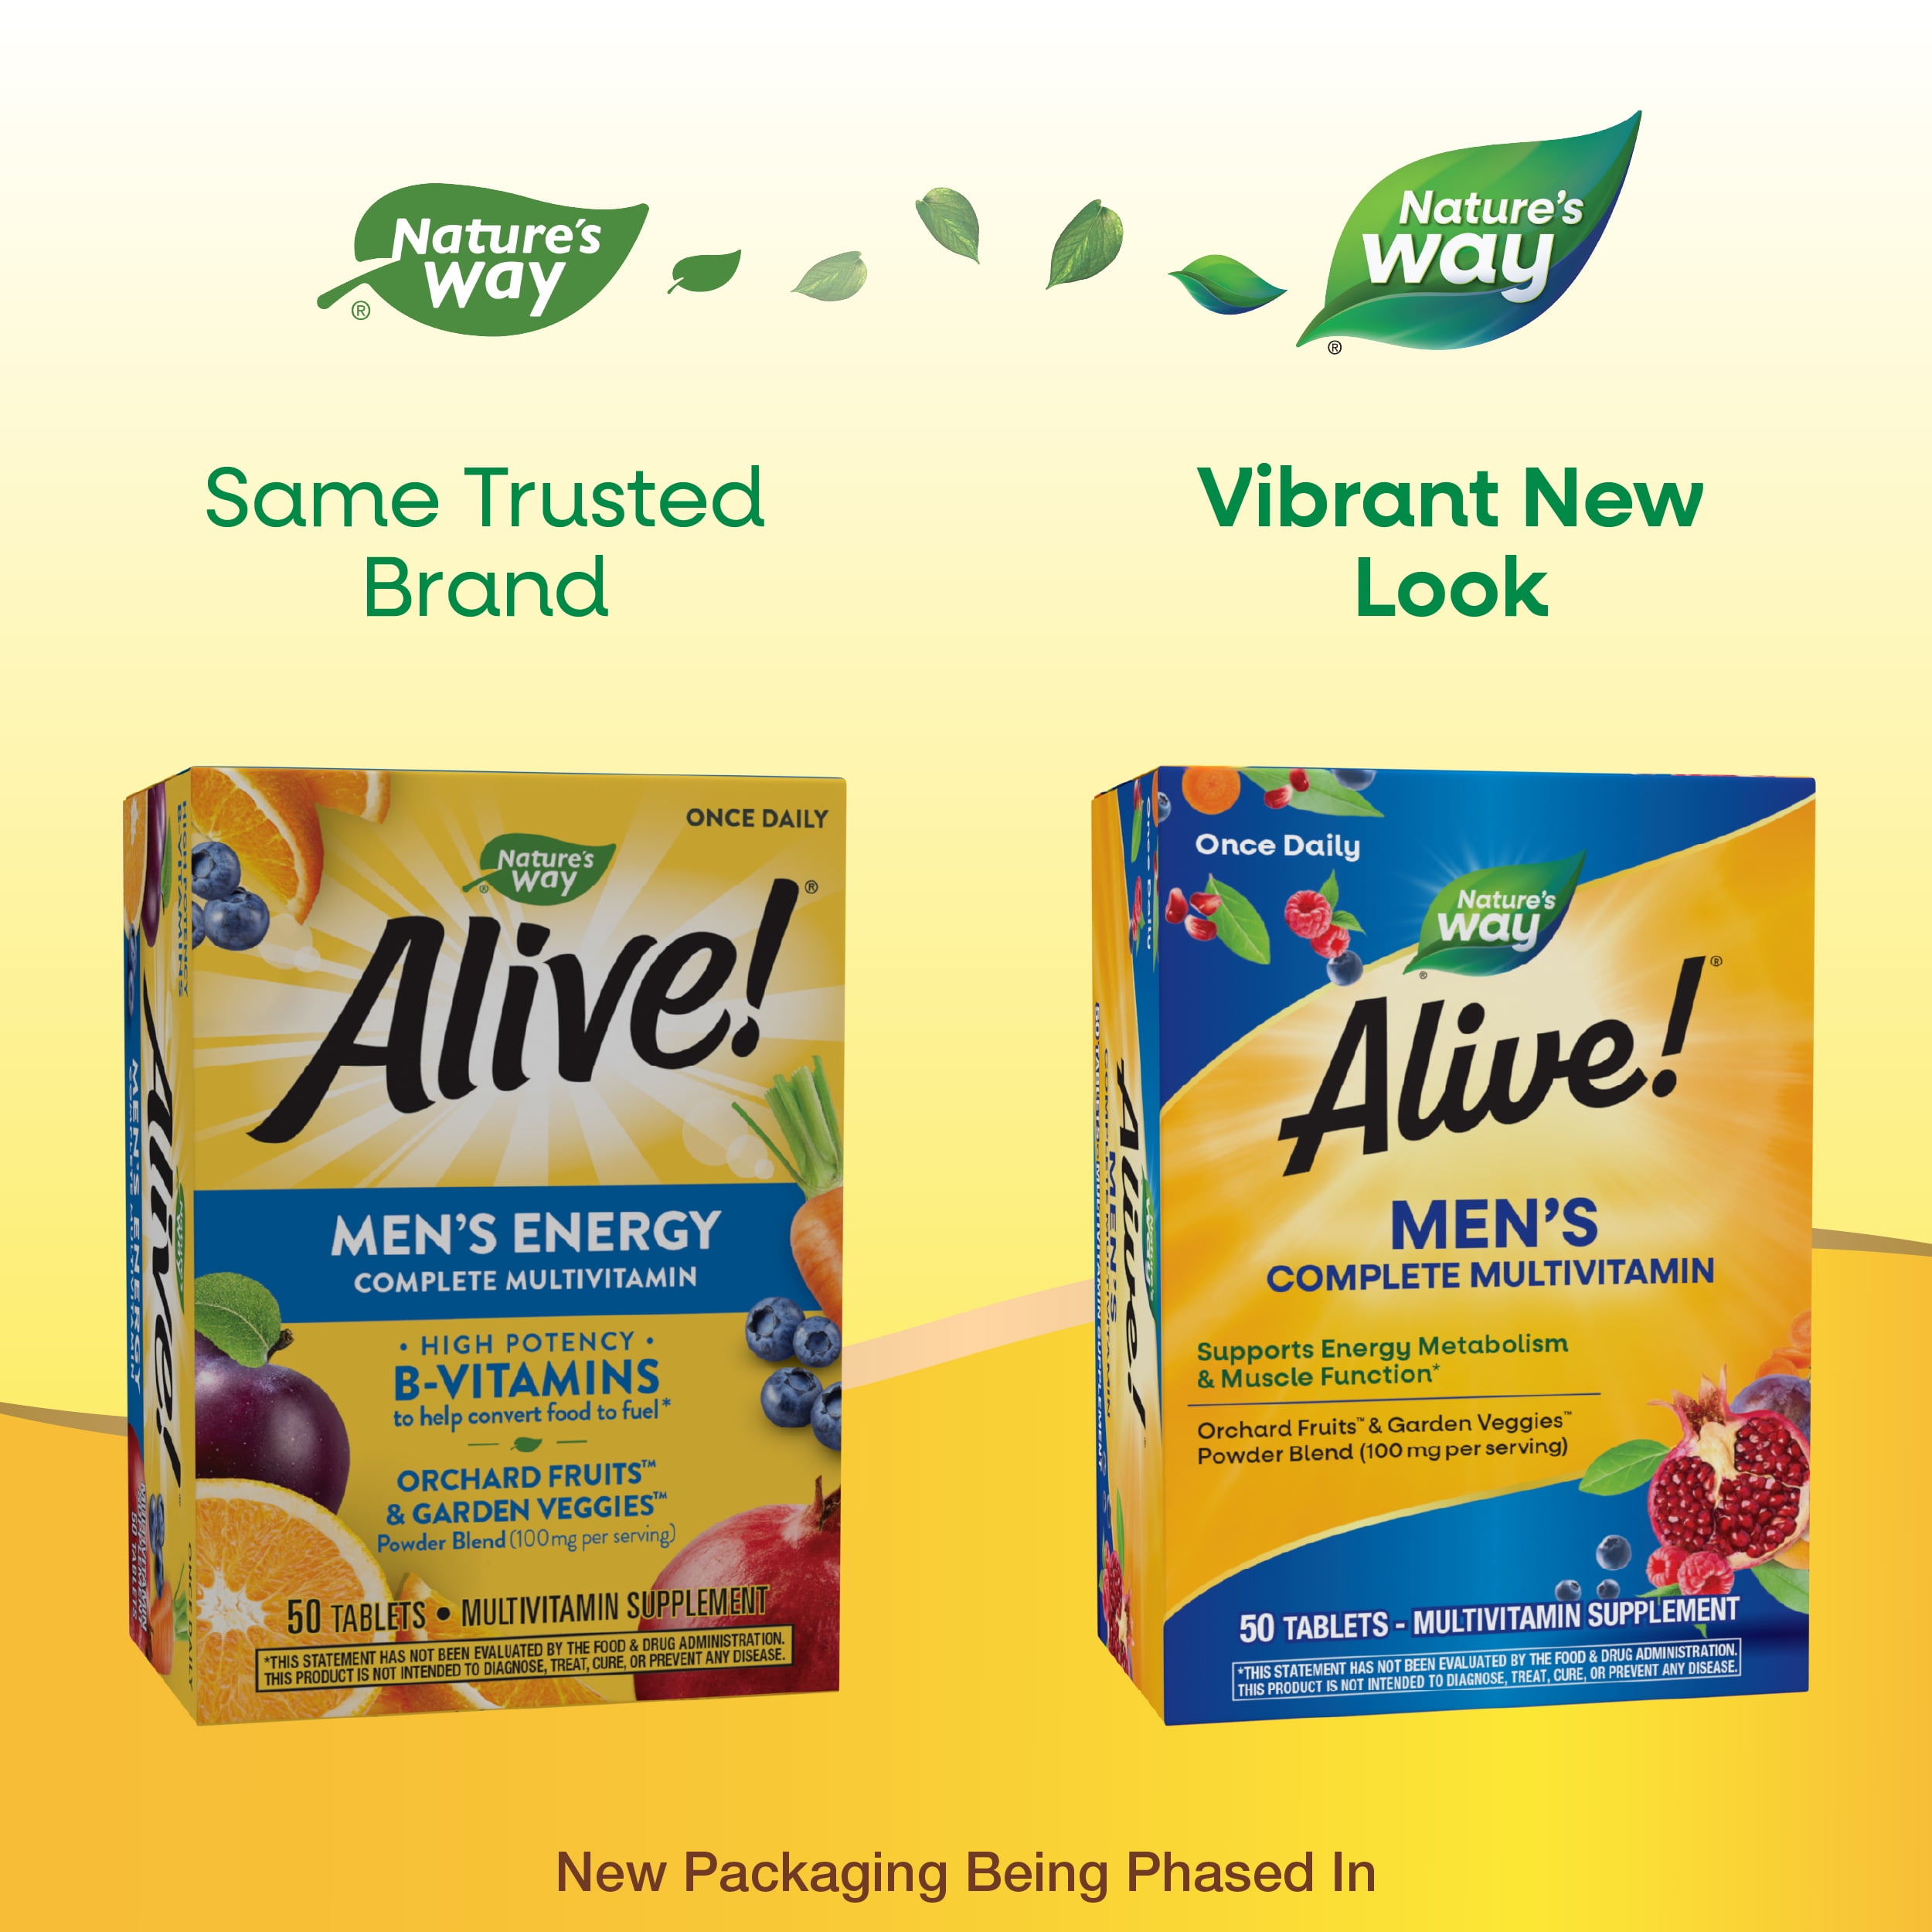 Alive!® Men's Complete Multivitamin